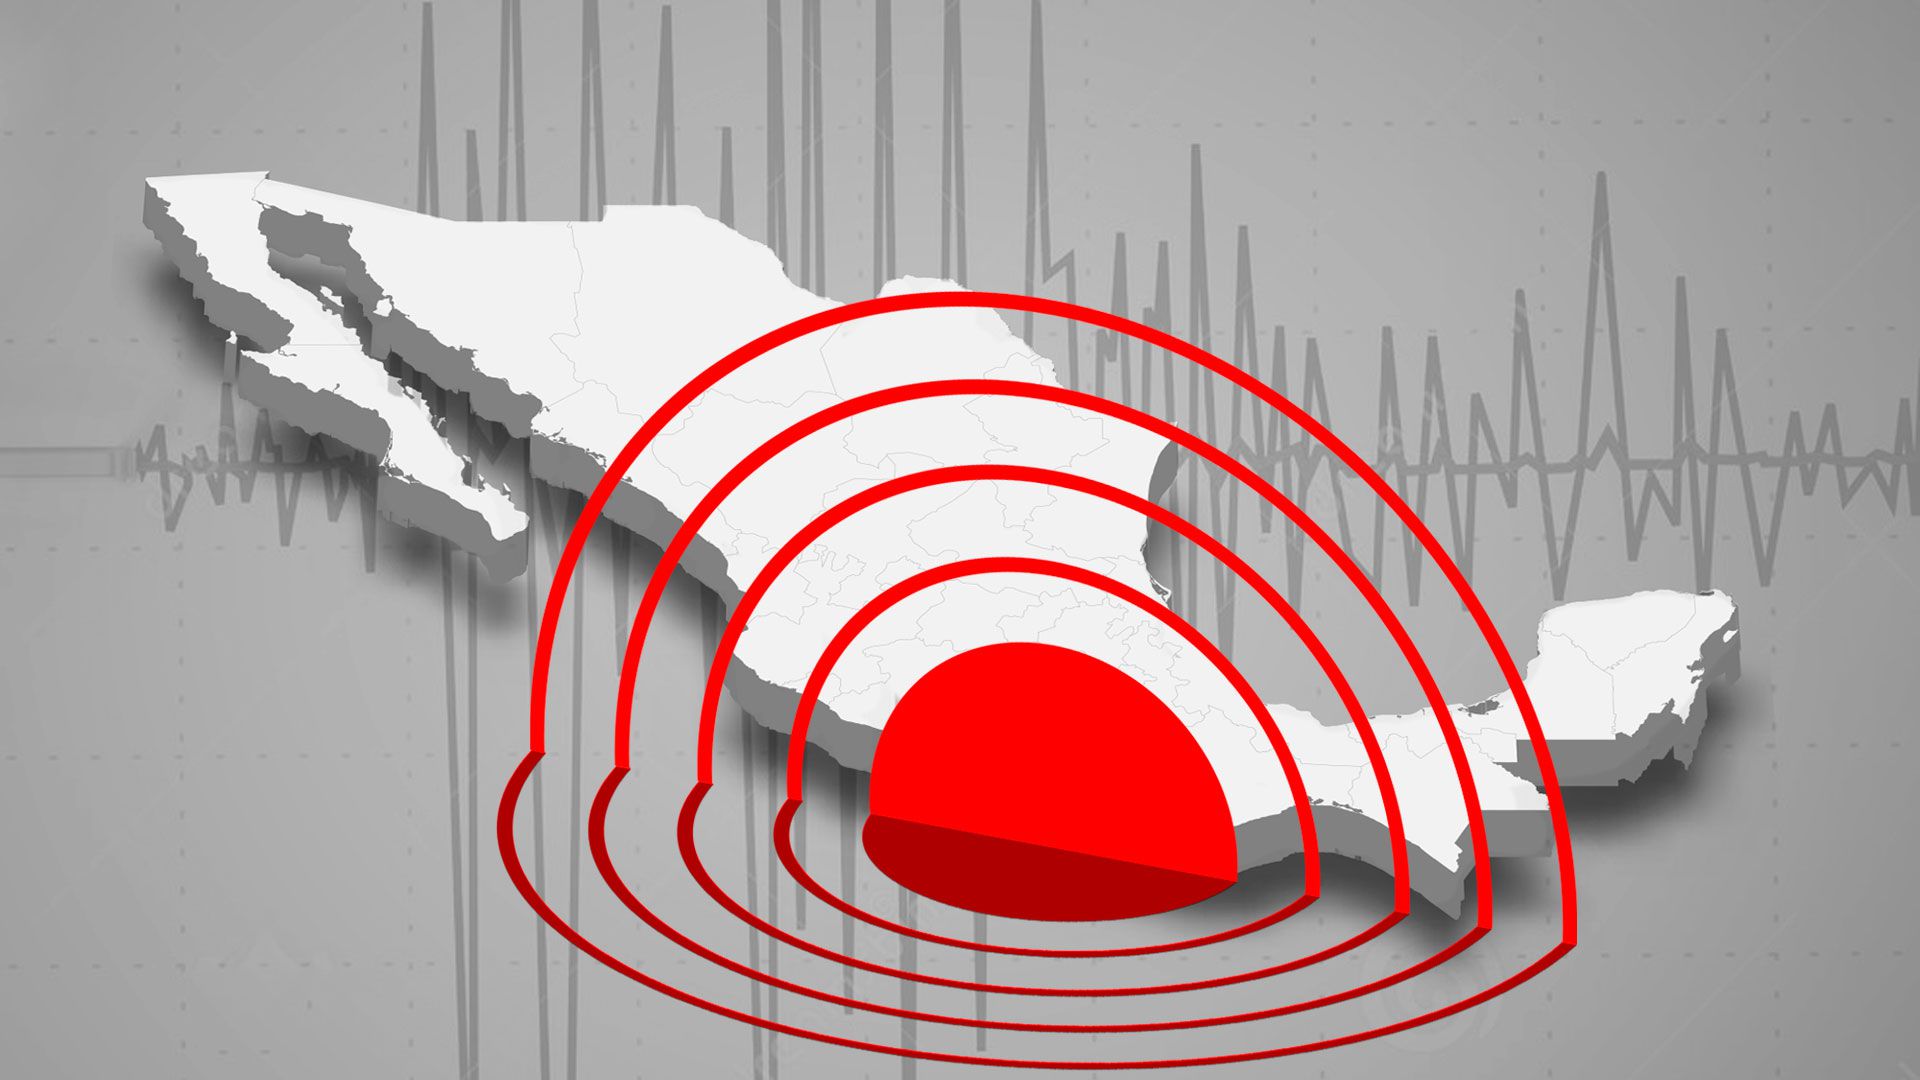 Sismológico registra temblor de magnitud 4.1 en Matías Romero